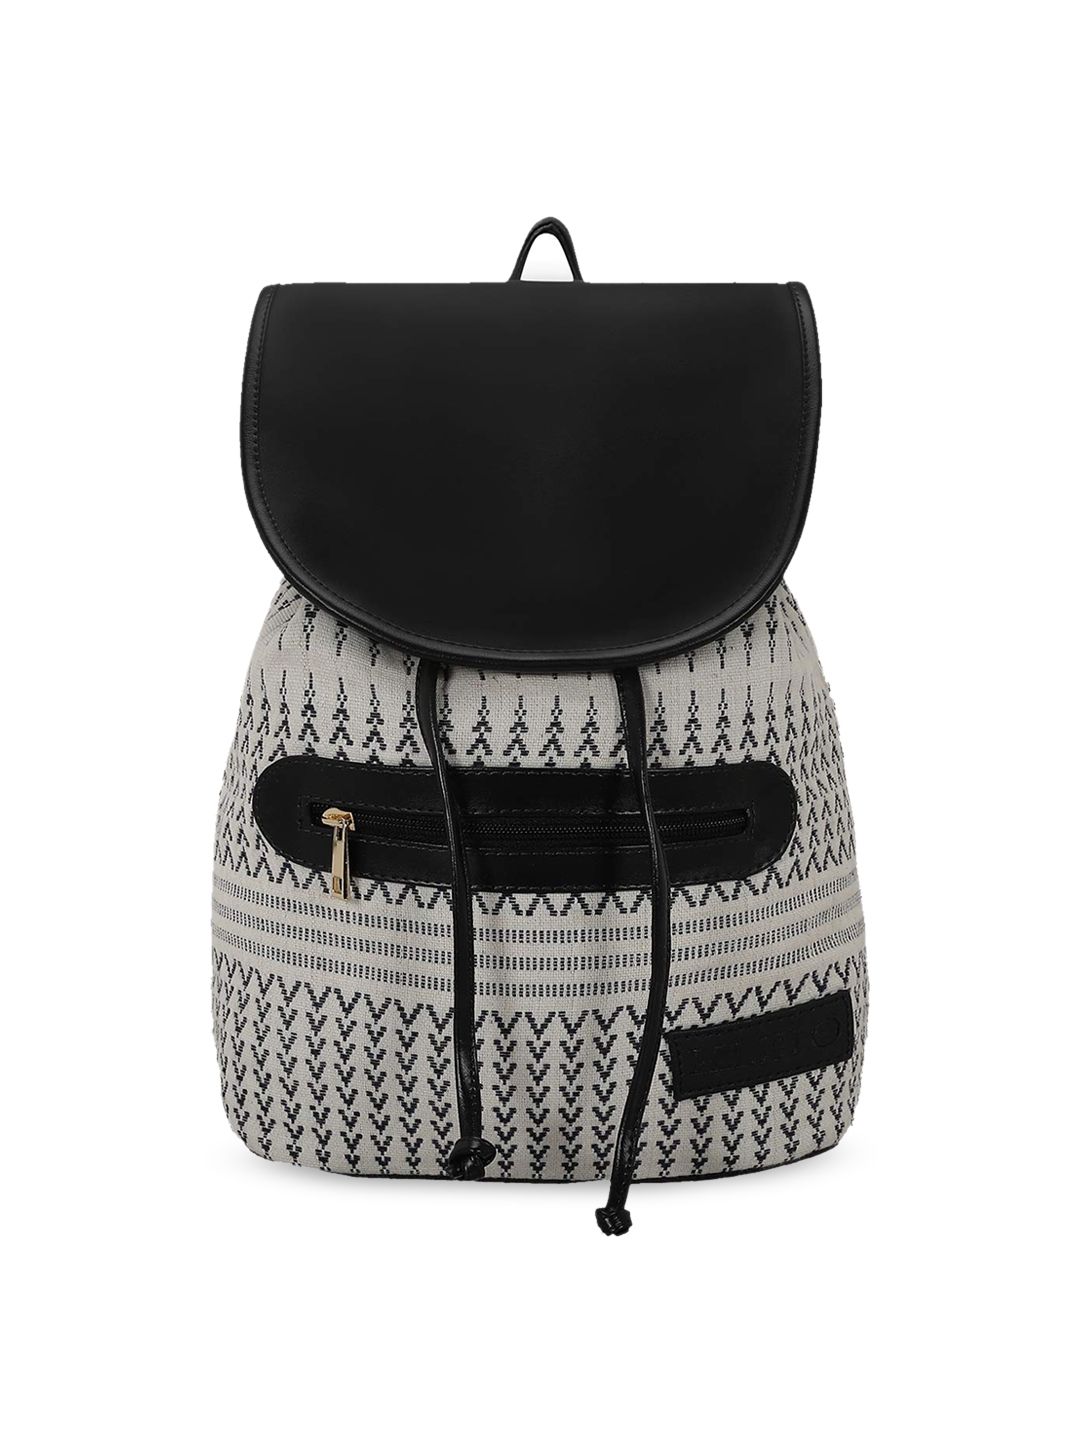 KLEIO Women Black & Grey Colorblocked Backpack Price in India